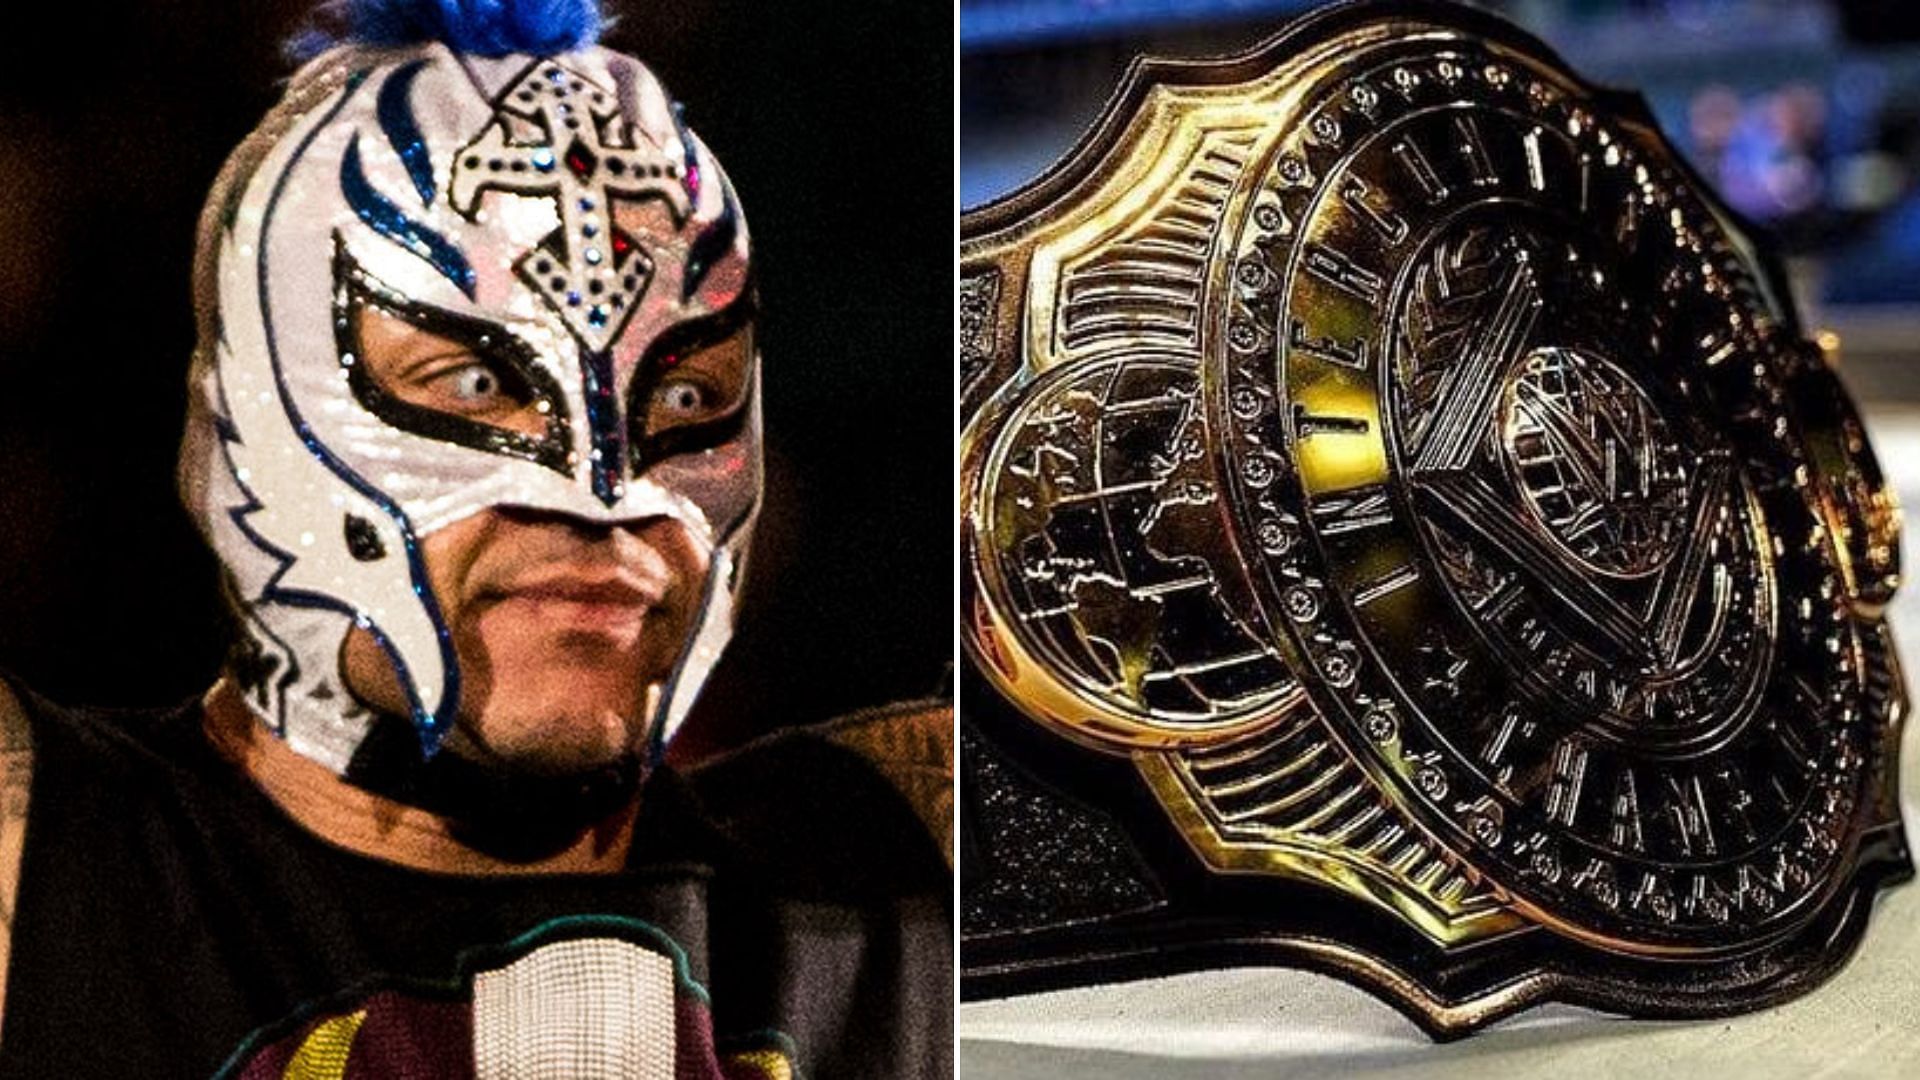 WWE Hall of Famer Rey Mysterio and the prestigious Intercontinental Championship.